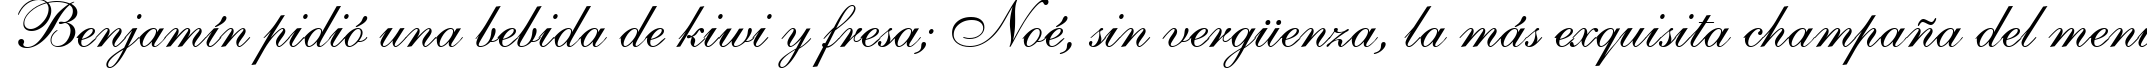 Пример написания шрифтом English 111 Vivace BT текста на испанском